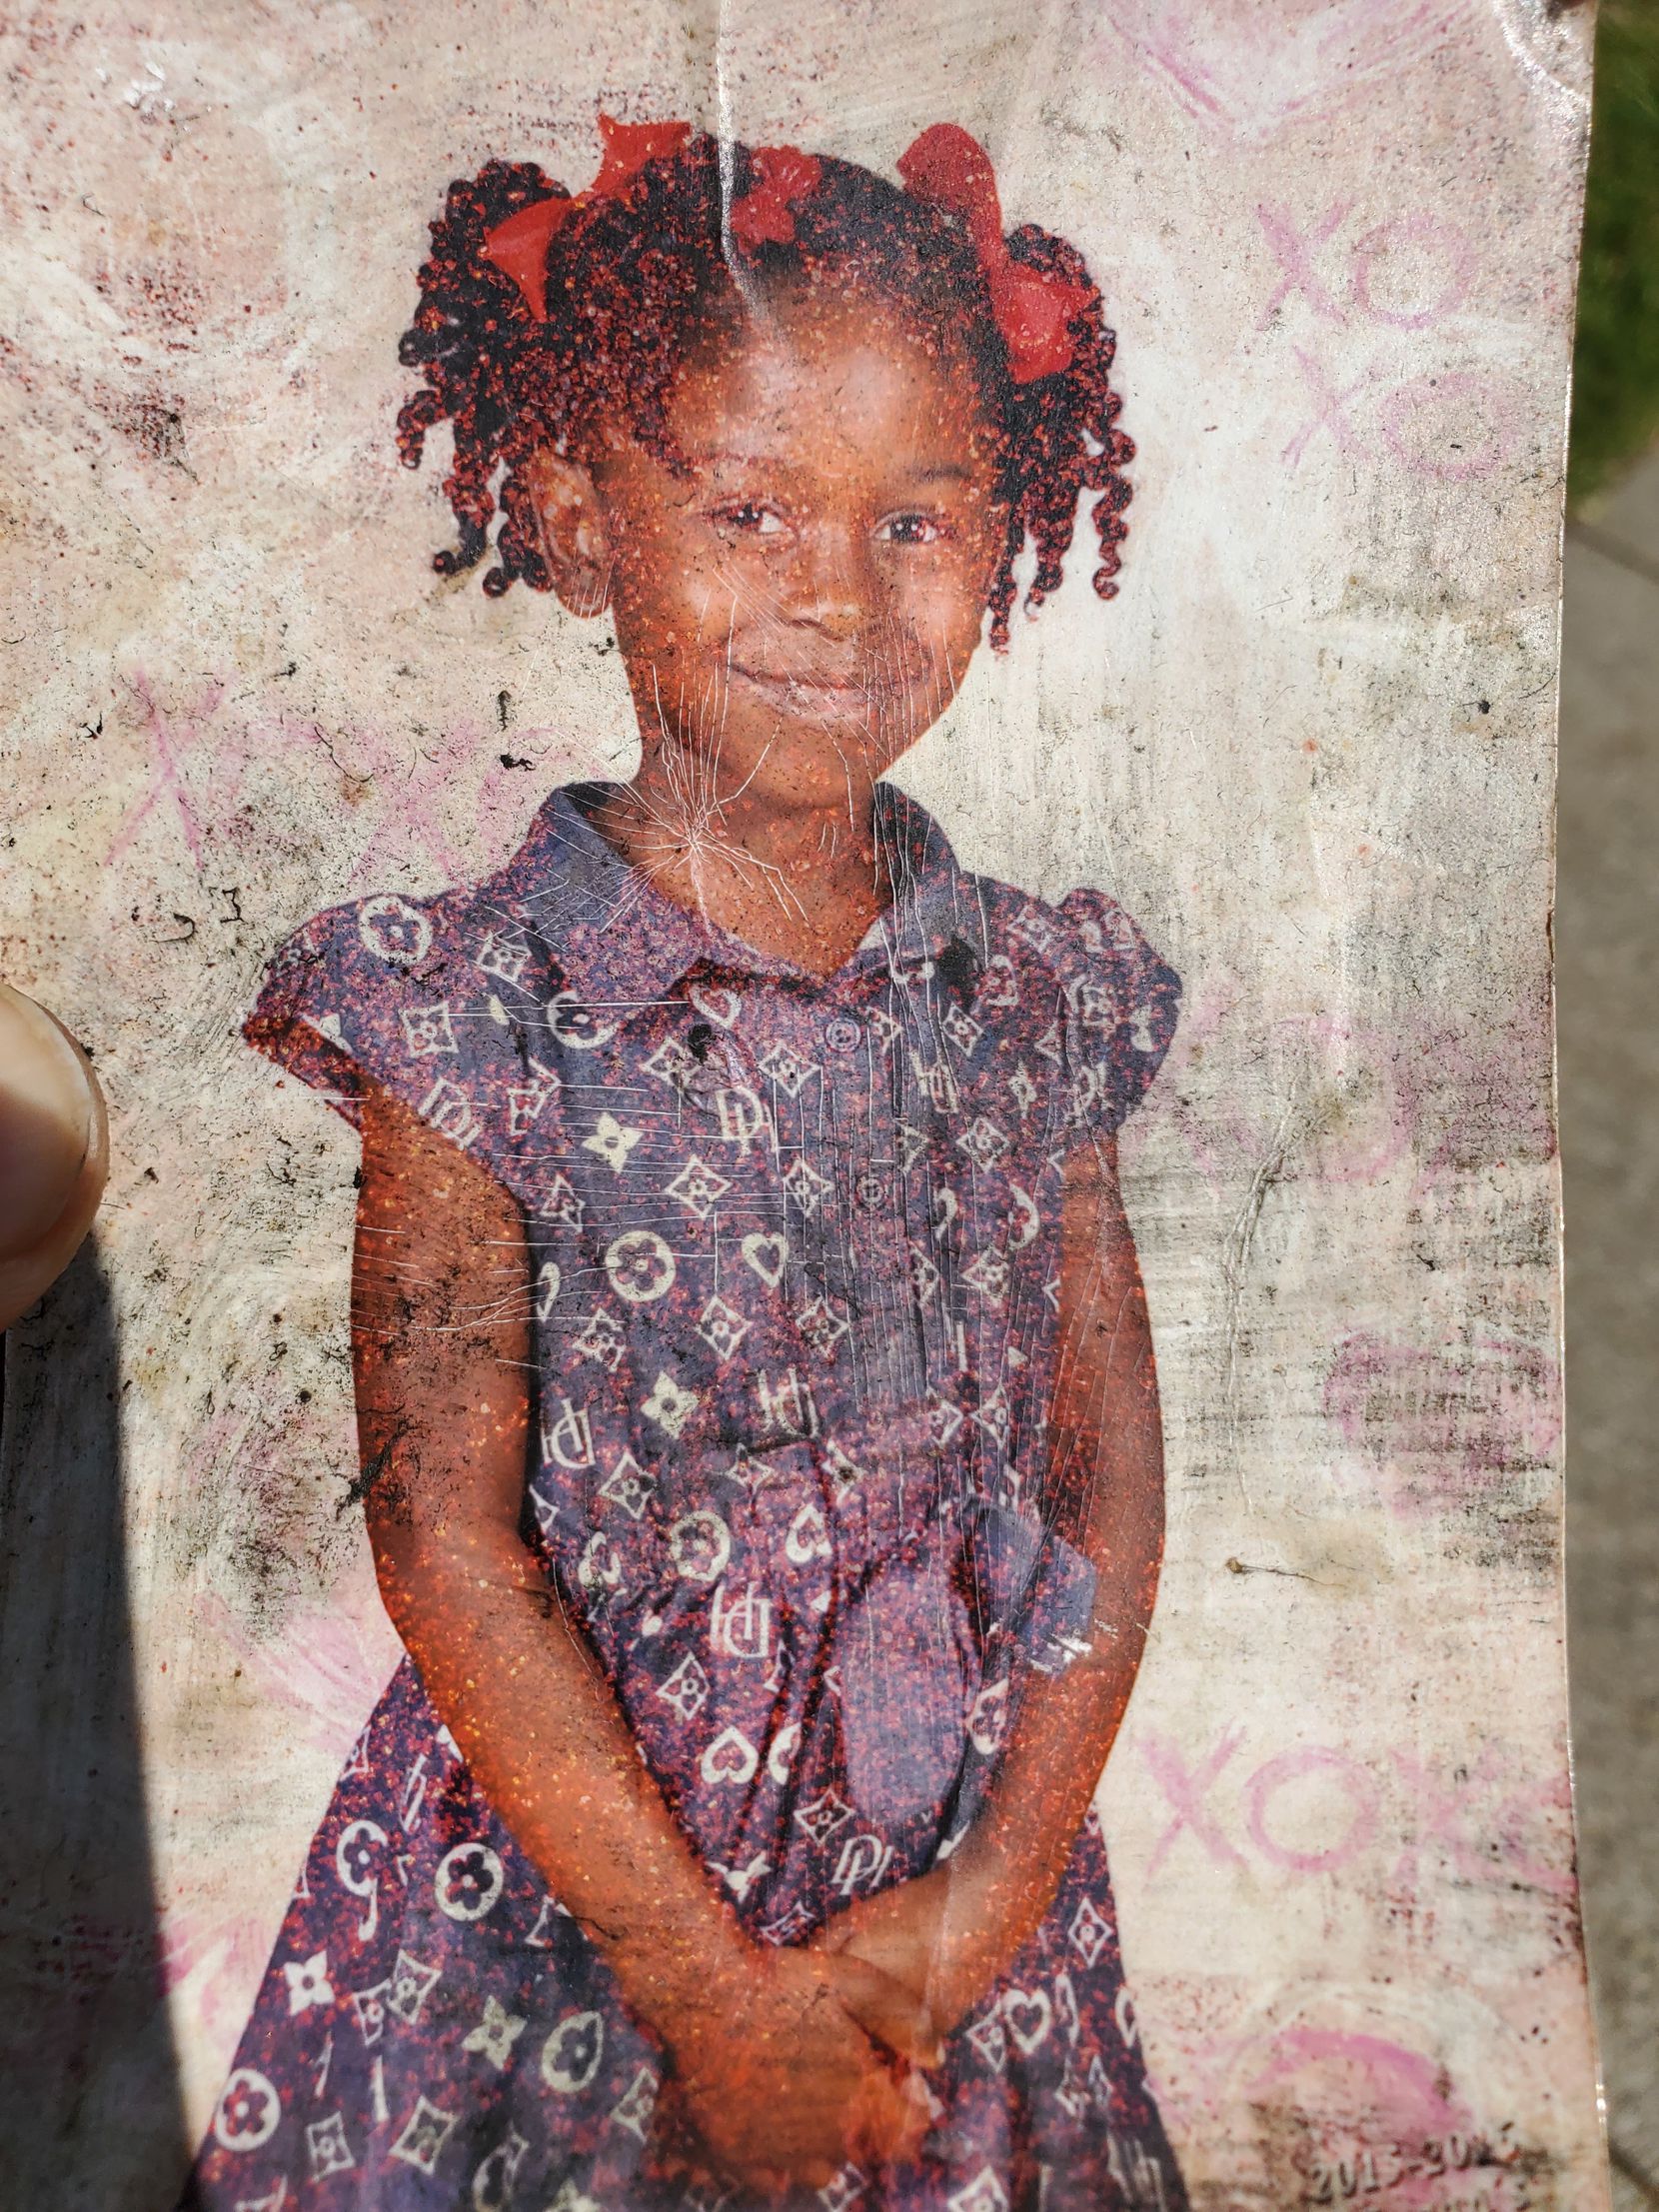 Brandoniya Bennett, the 9-year-old girl killed at Roseland Townhomes